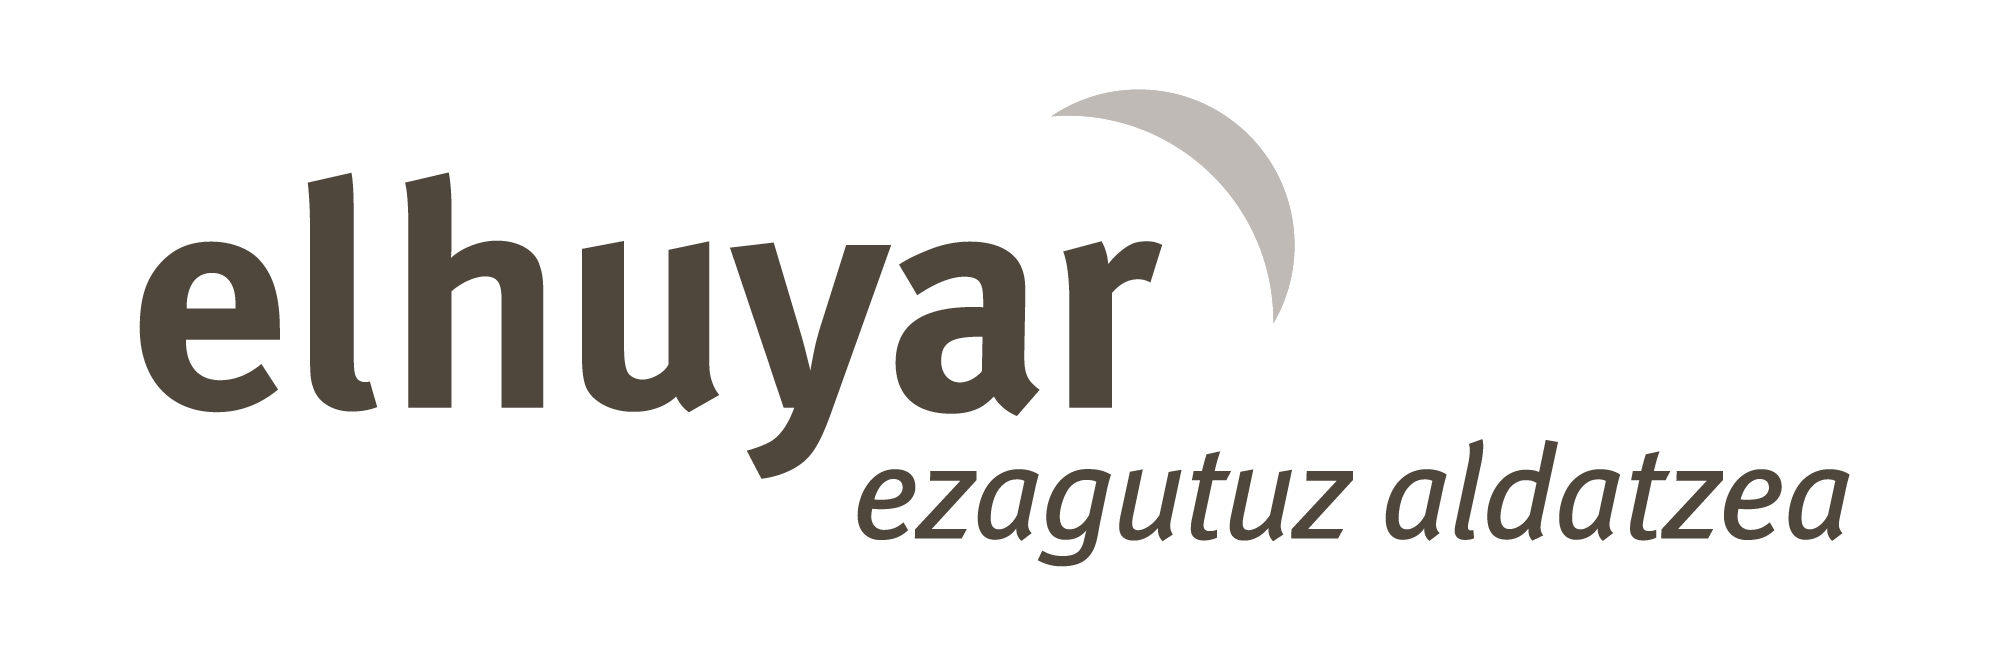 Fondation Elhuyar